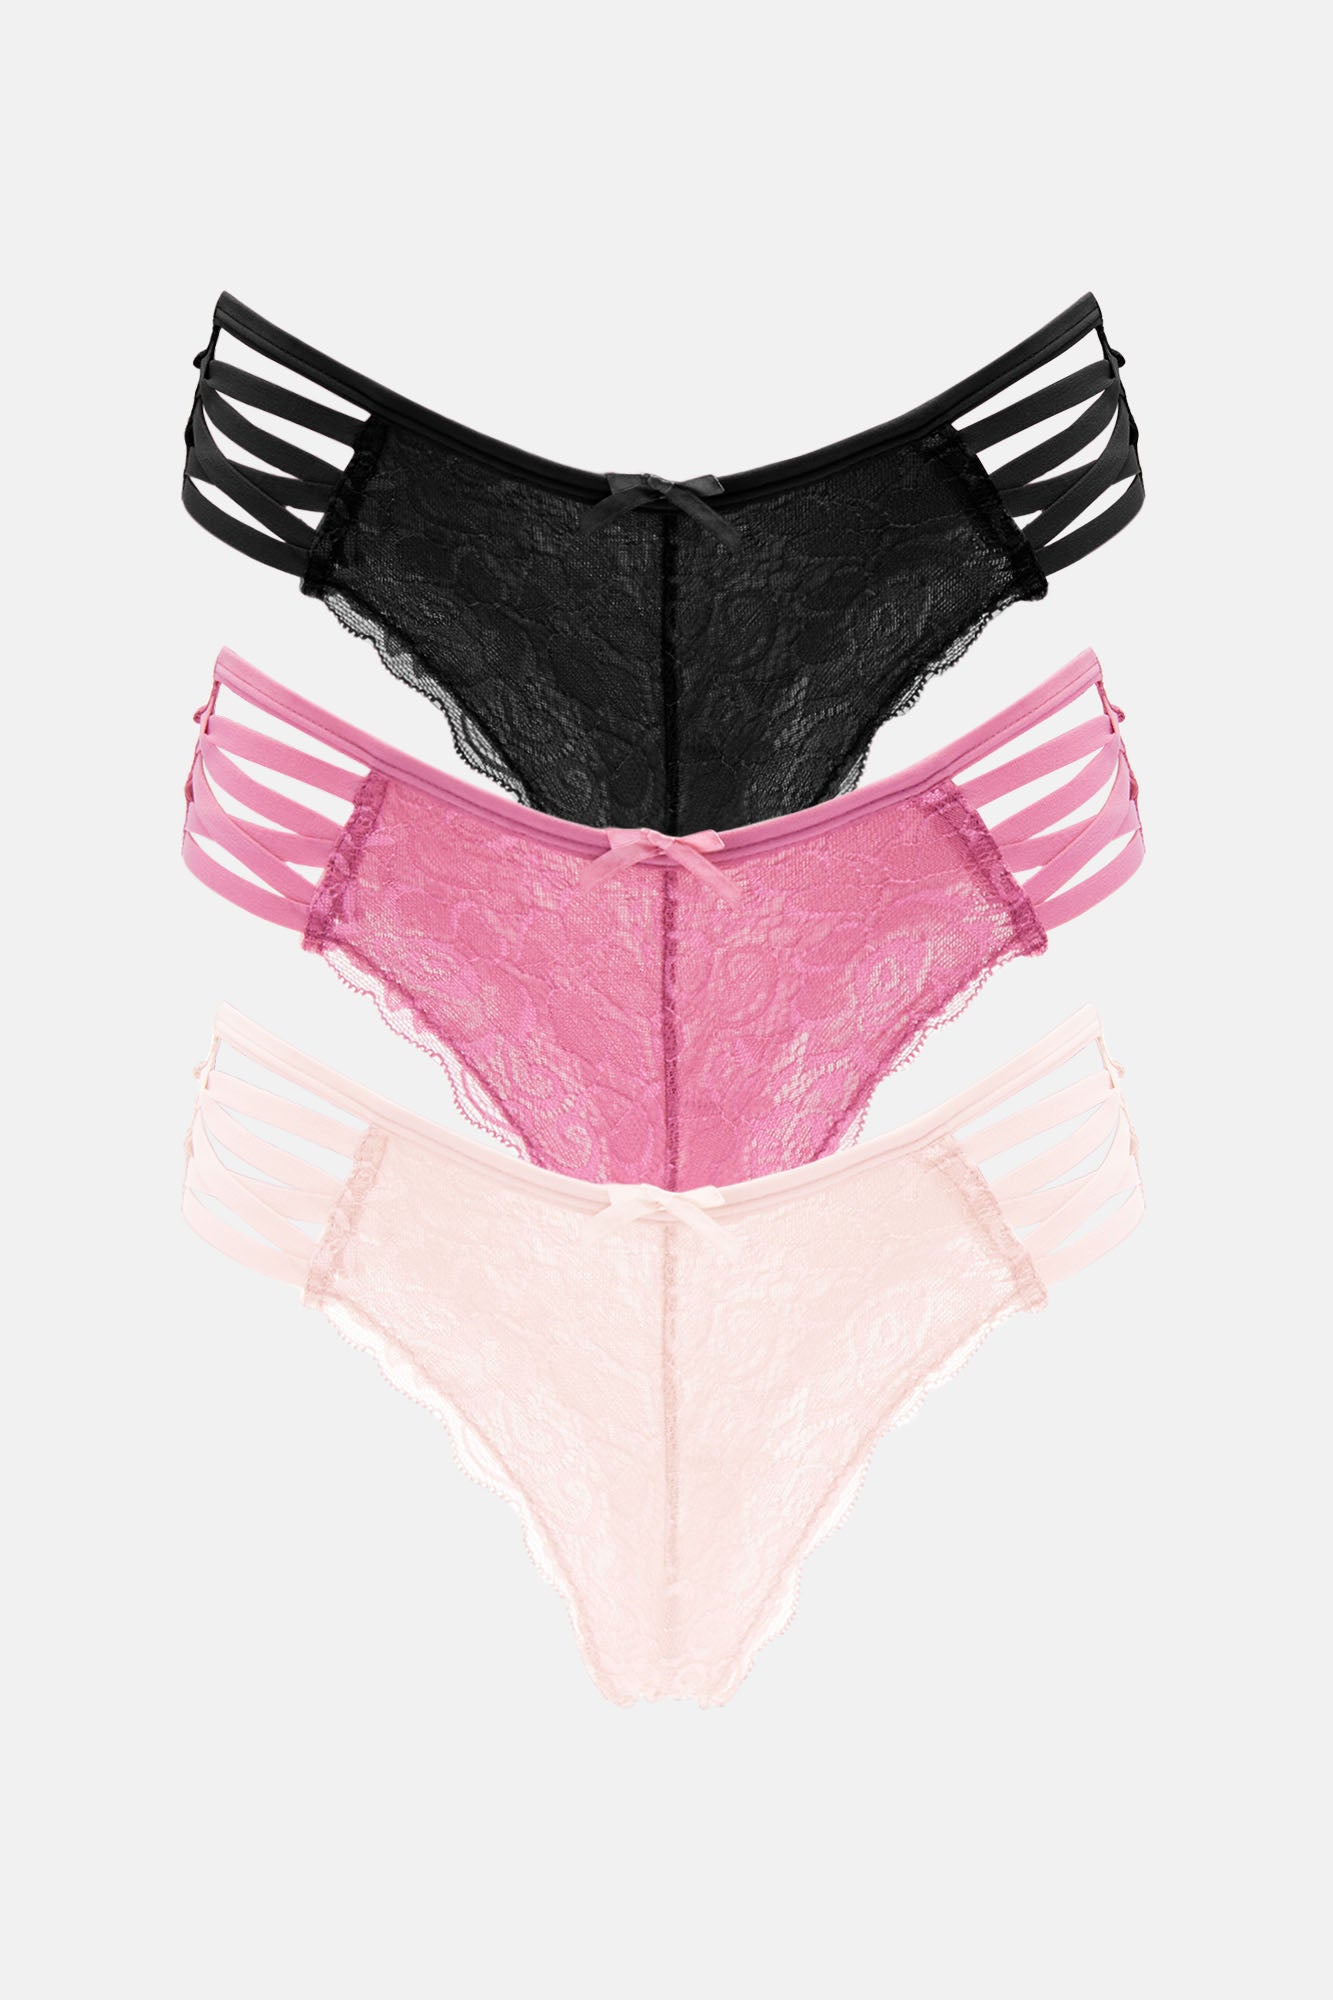 Your Secret Crush Seamless Thong 3 Pack Panties - Fuchsia/combo, Fashion  Nova, Lingerie & Sleepwear